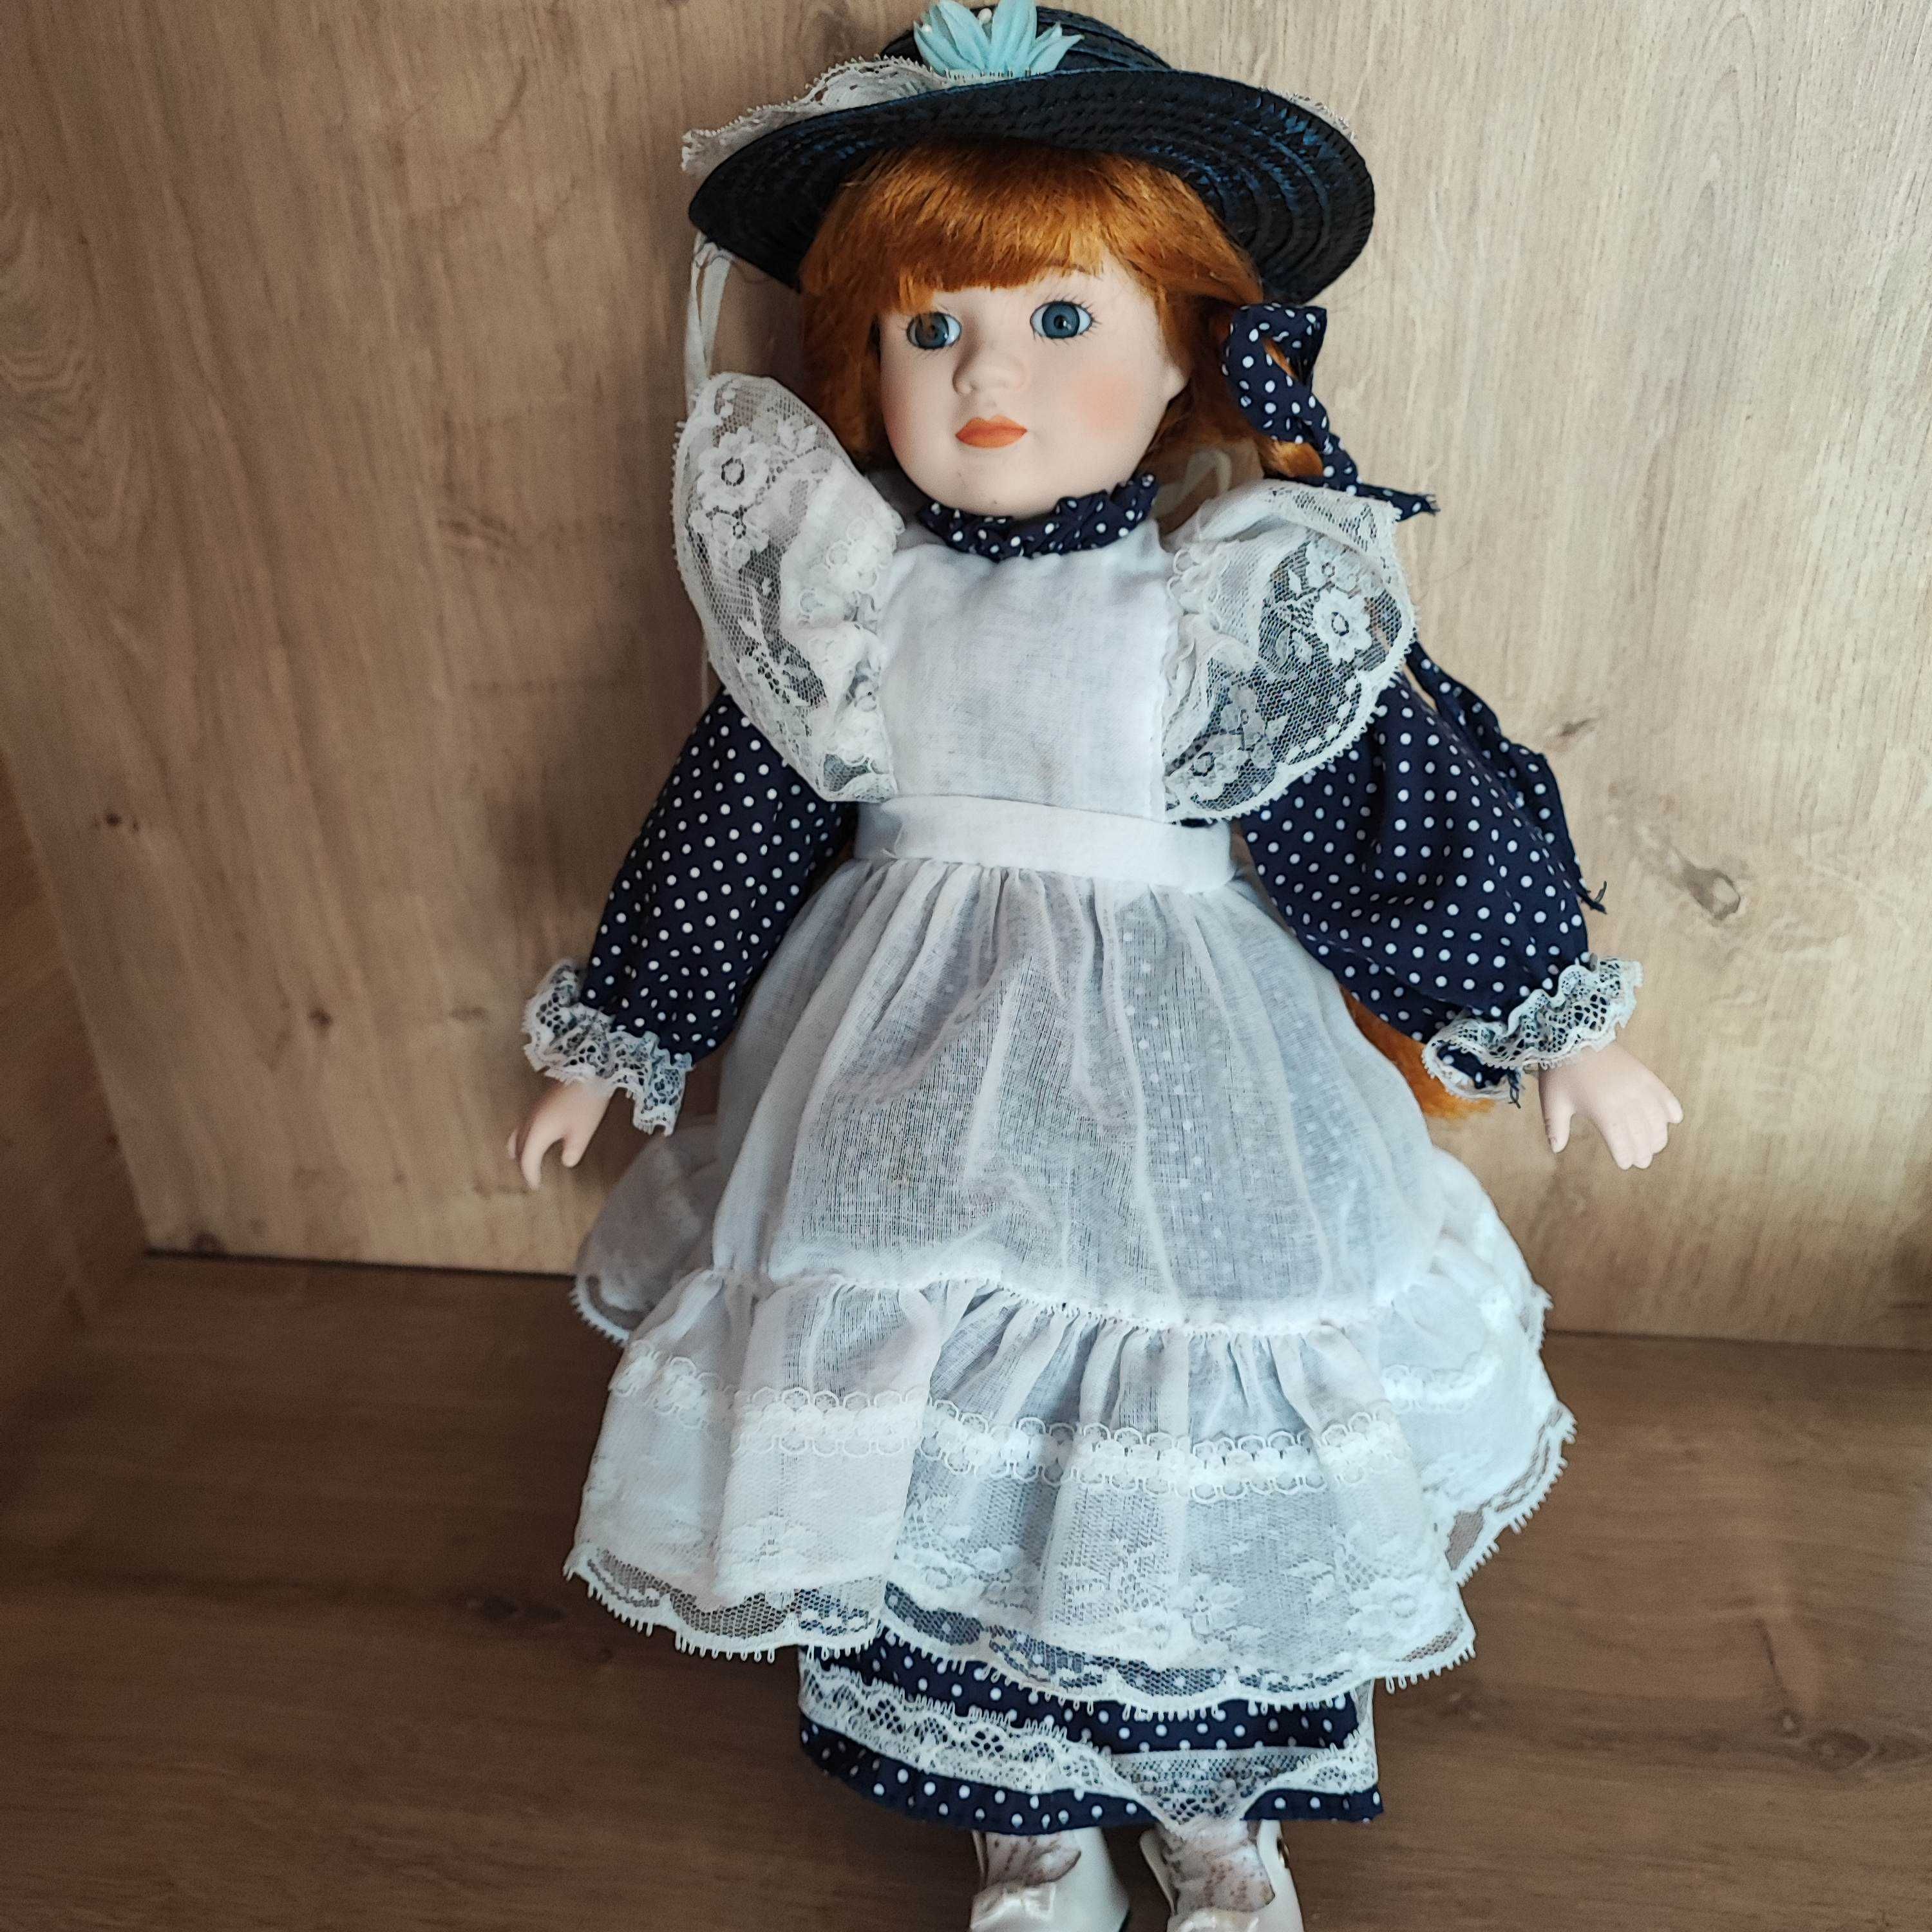 PROMENADE COLLECTION Lalka kolekcjonerska (collectible porcelain doll)